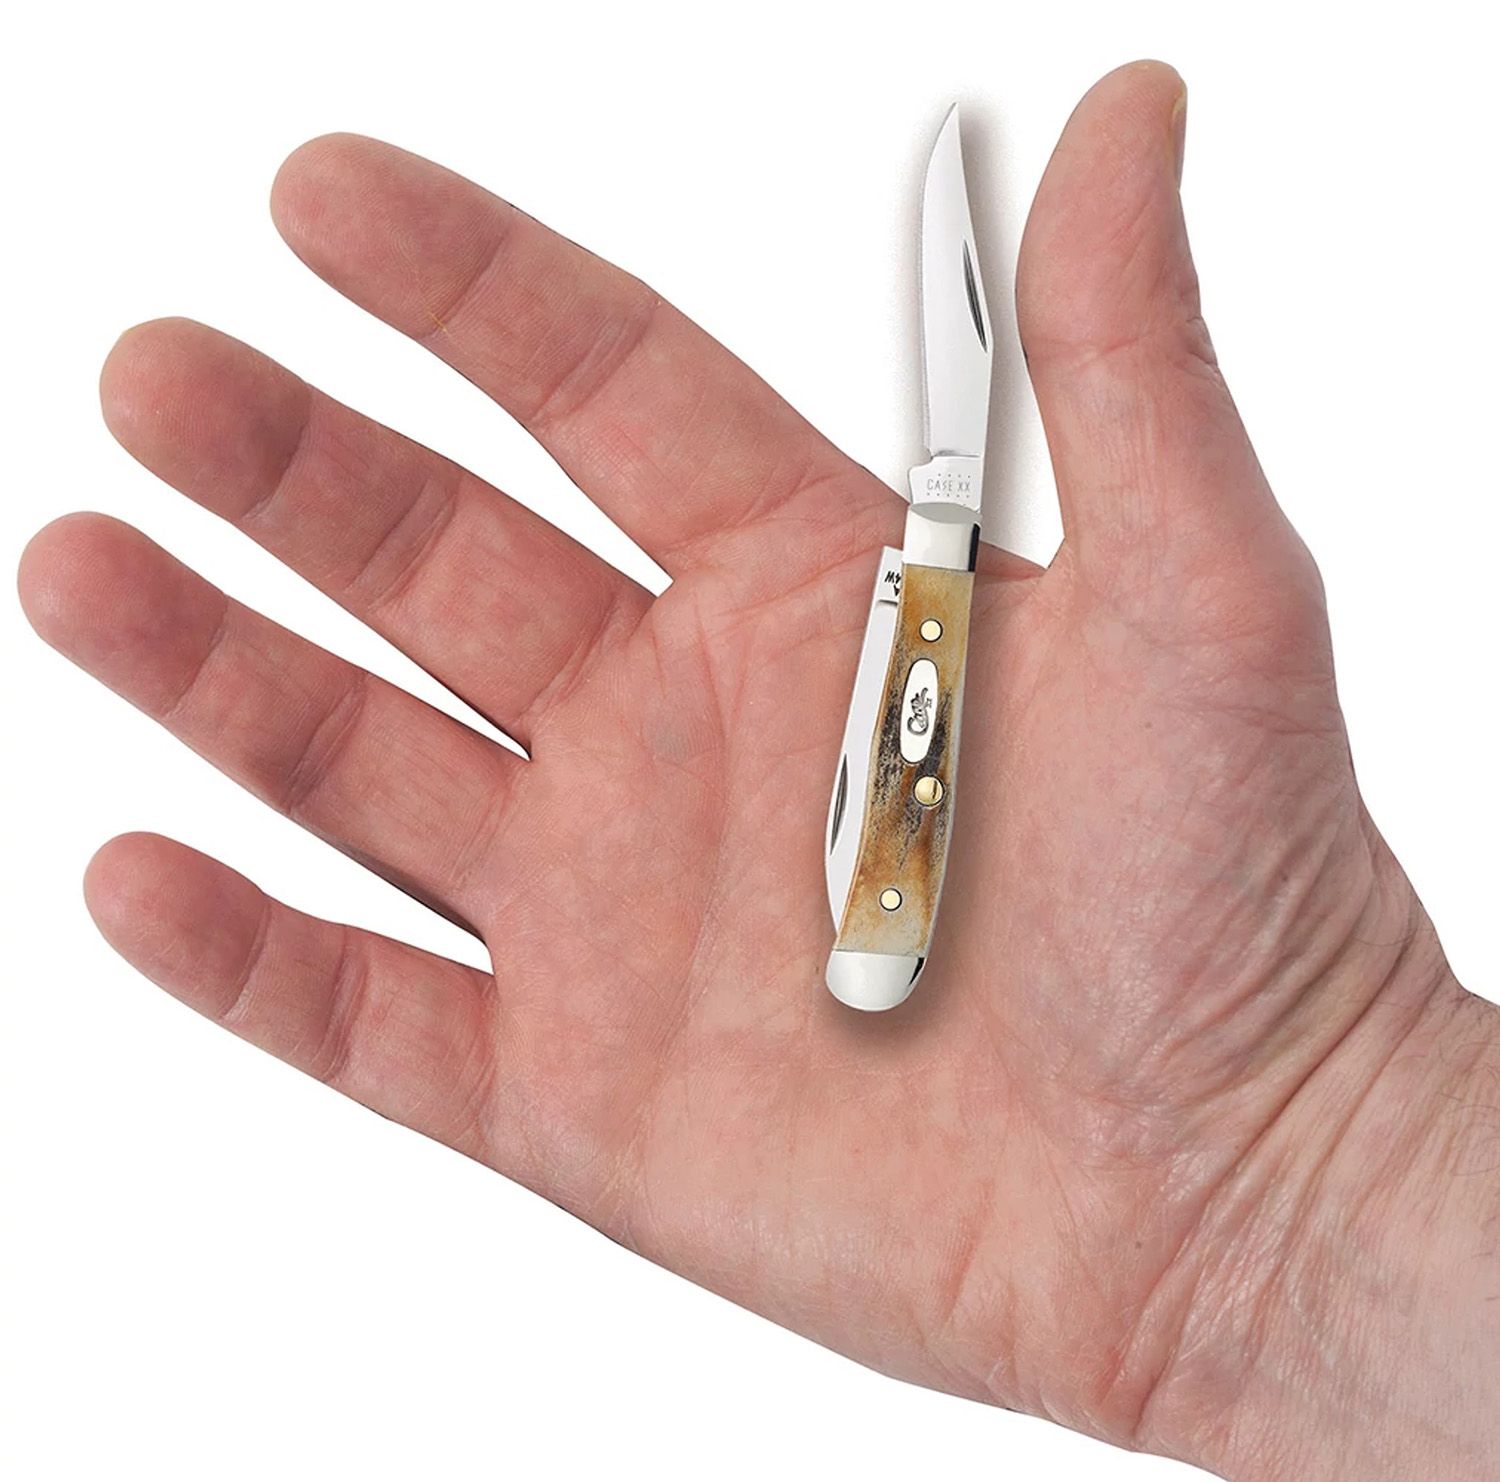 Case Tiny Trapper Genuine Stag 05968, 52154W SS pocket knife